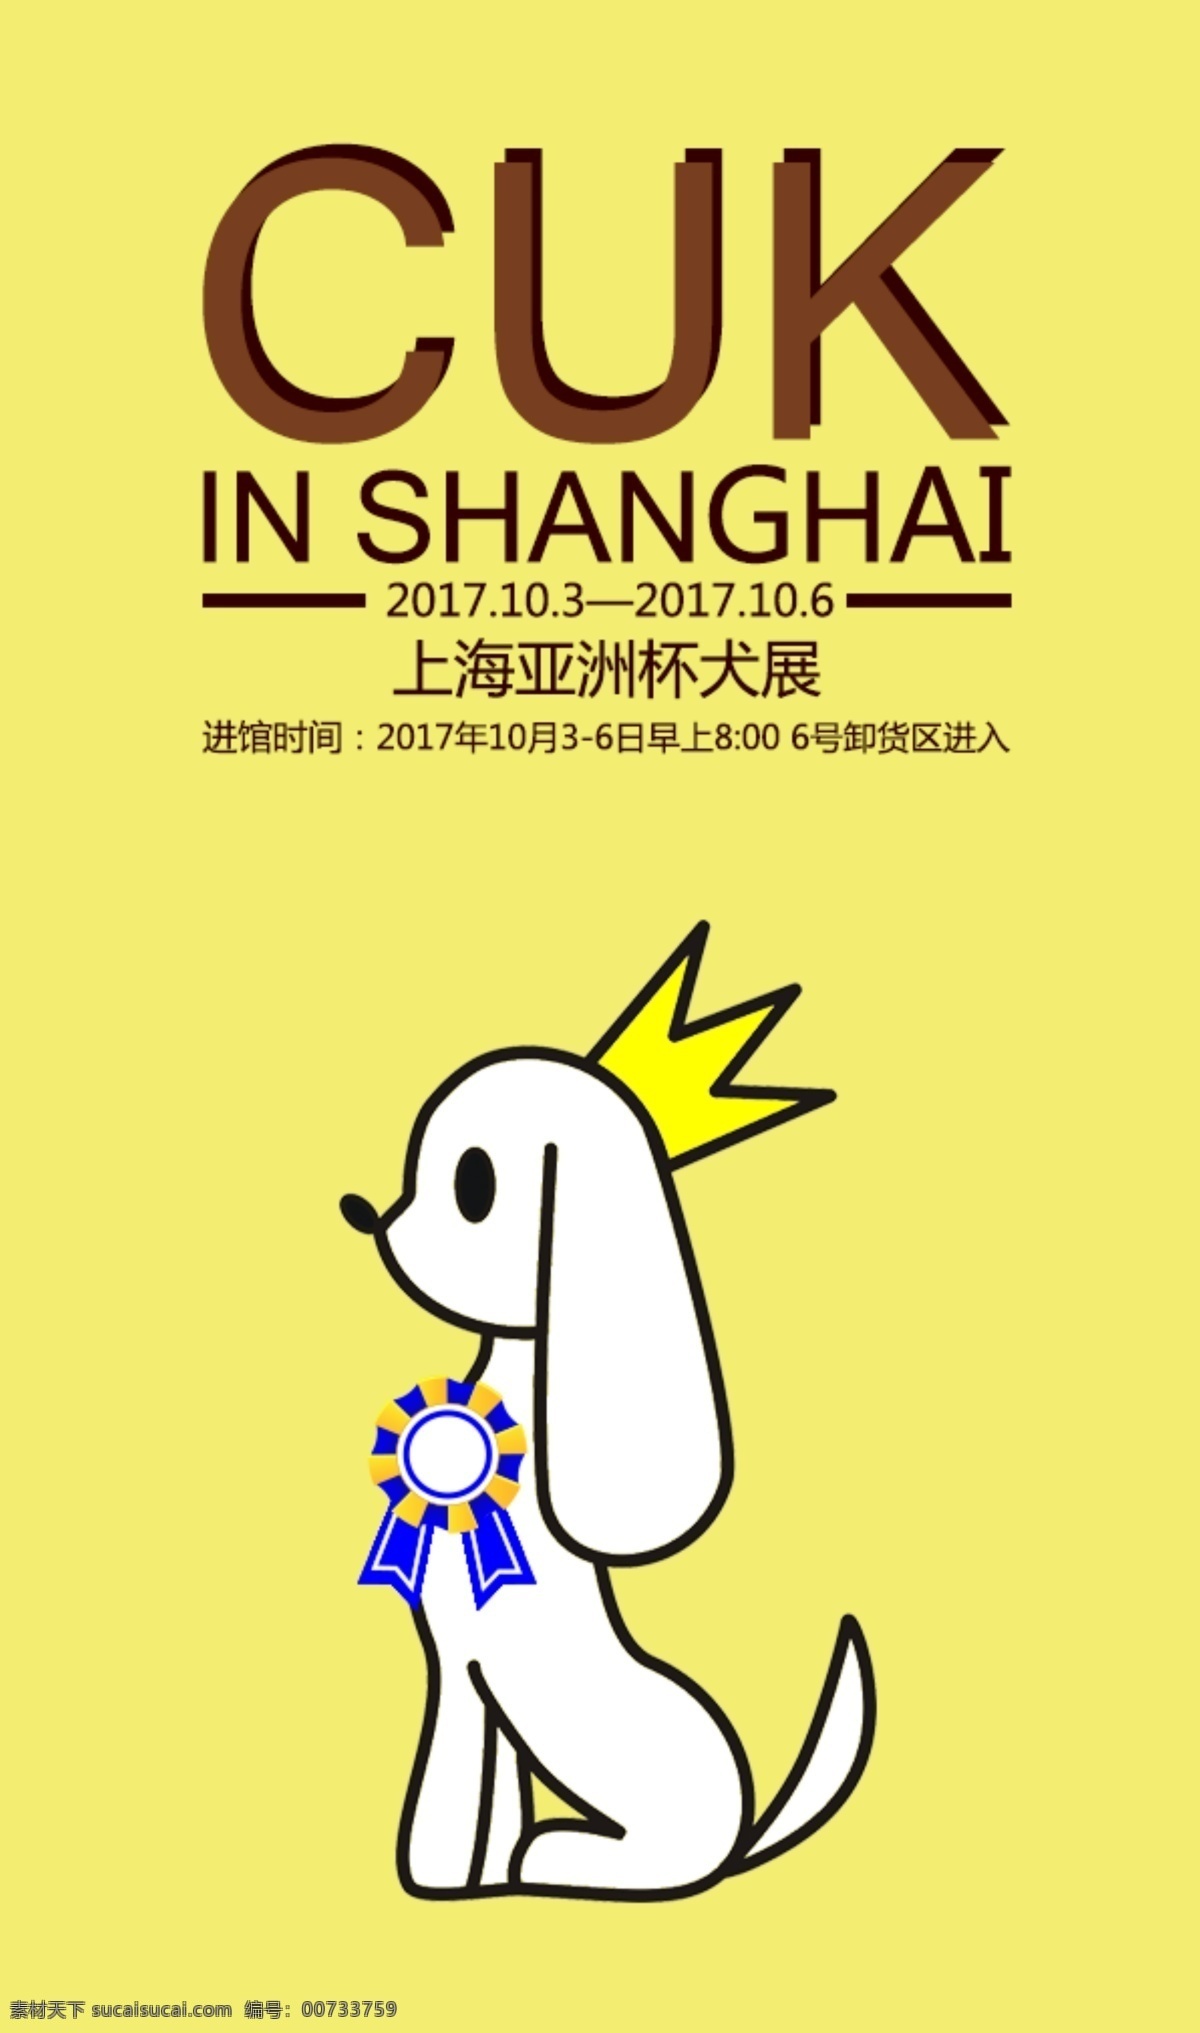 cuk 上海 亚洲杯 犬 展 文件下载 狗 犬展 宠物 海报 psd文件 黄色 棕色 王冠 白色